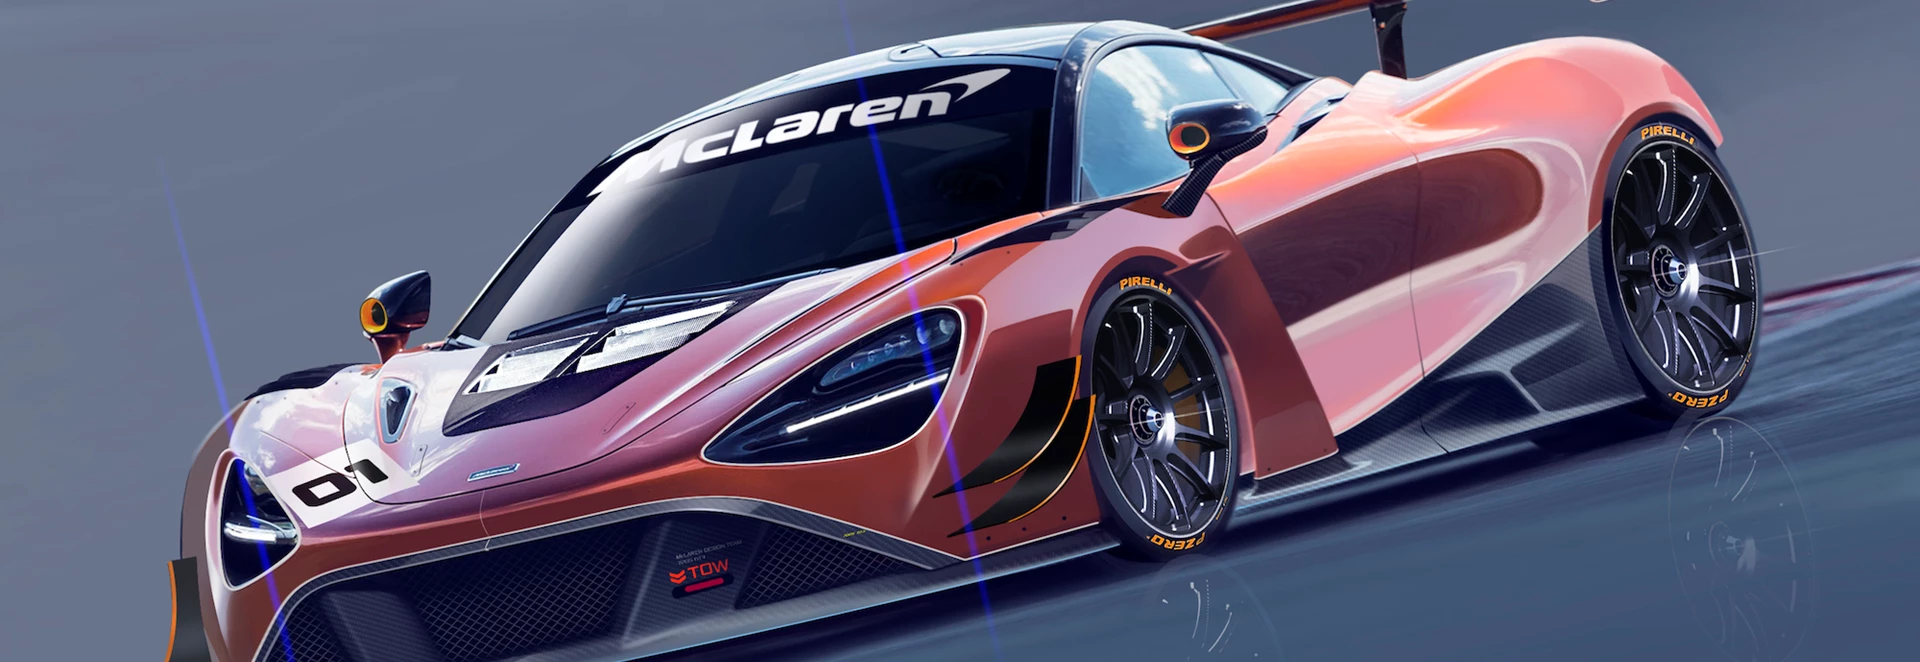 McLaren 720S GT3 race car revealed